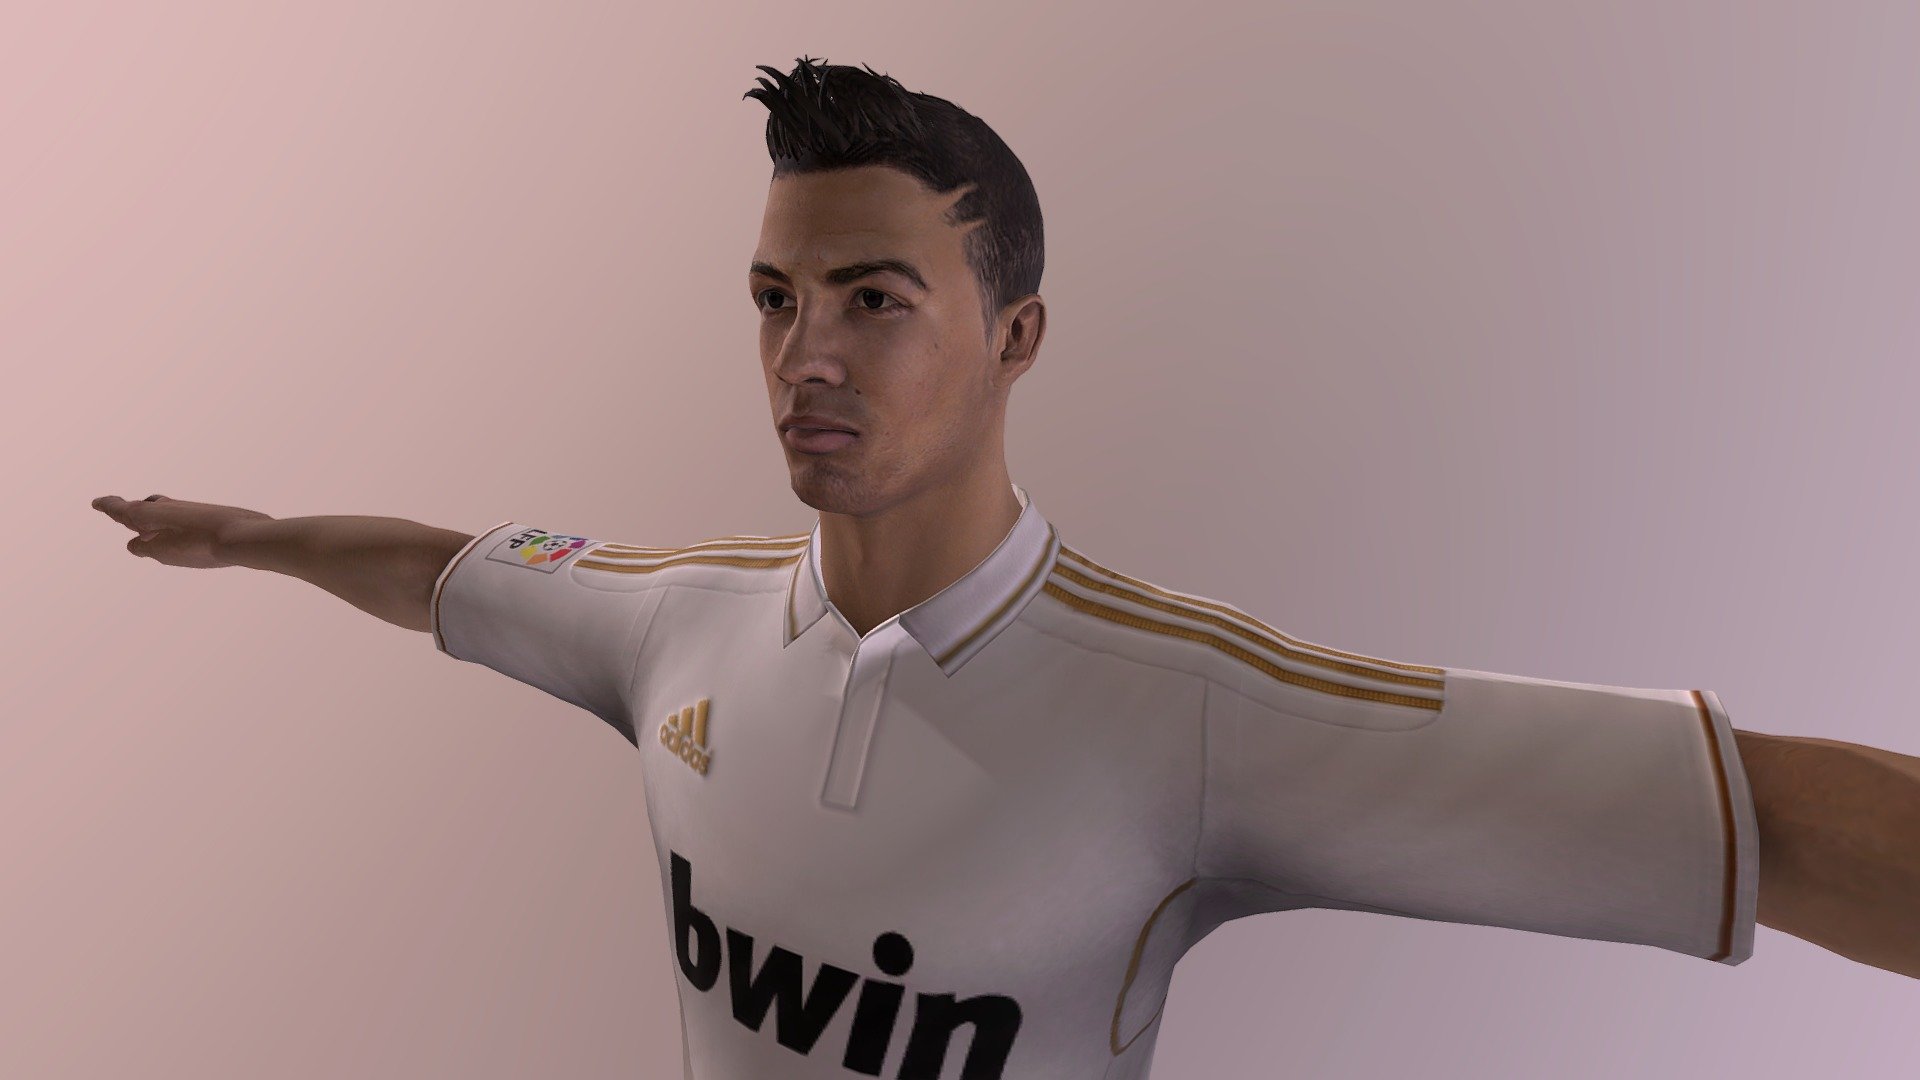 bjjbj - Christiano Ronaldo - 3D model by Daniel.de.Silva 3d model